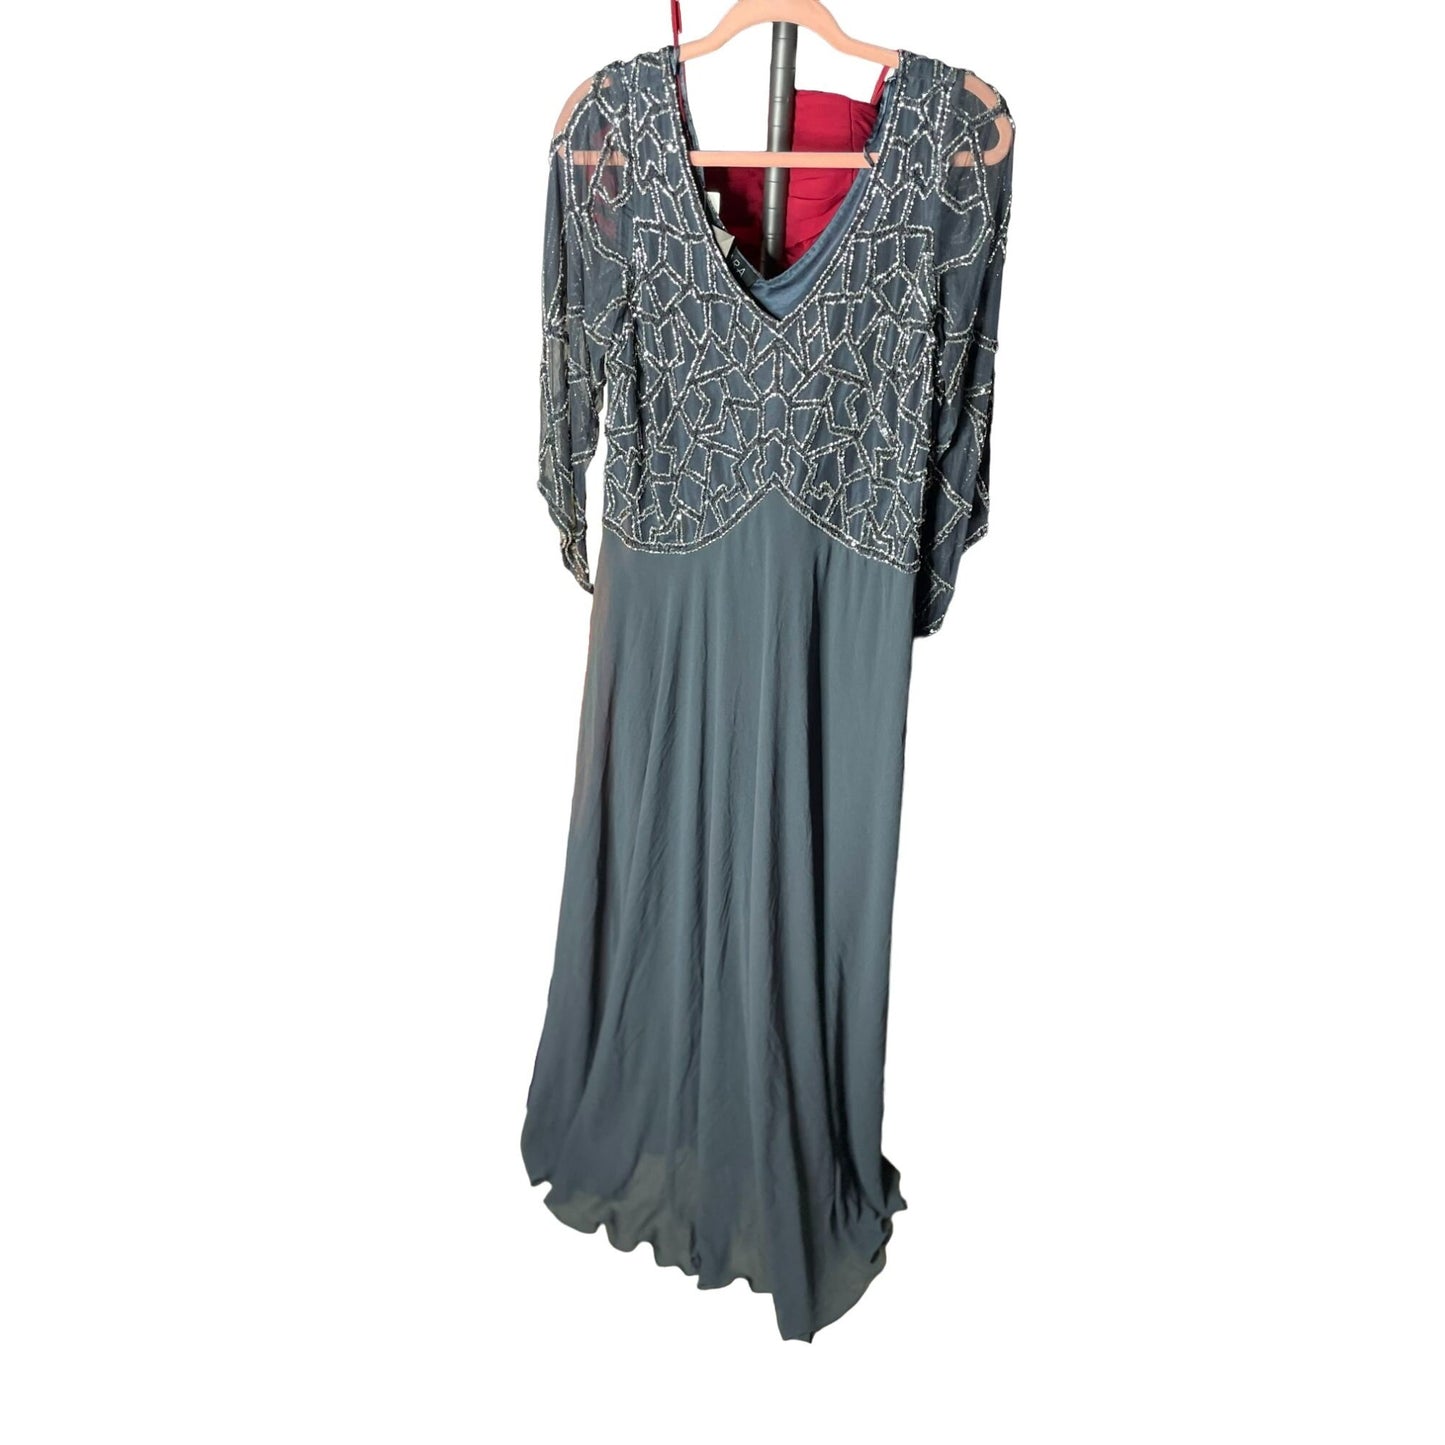 J Kara Womens Plus Size 3/4 Sleeve Embellished V-neck Chiffon Dress Gray Sz 16W